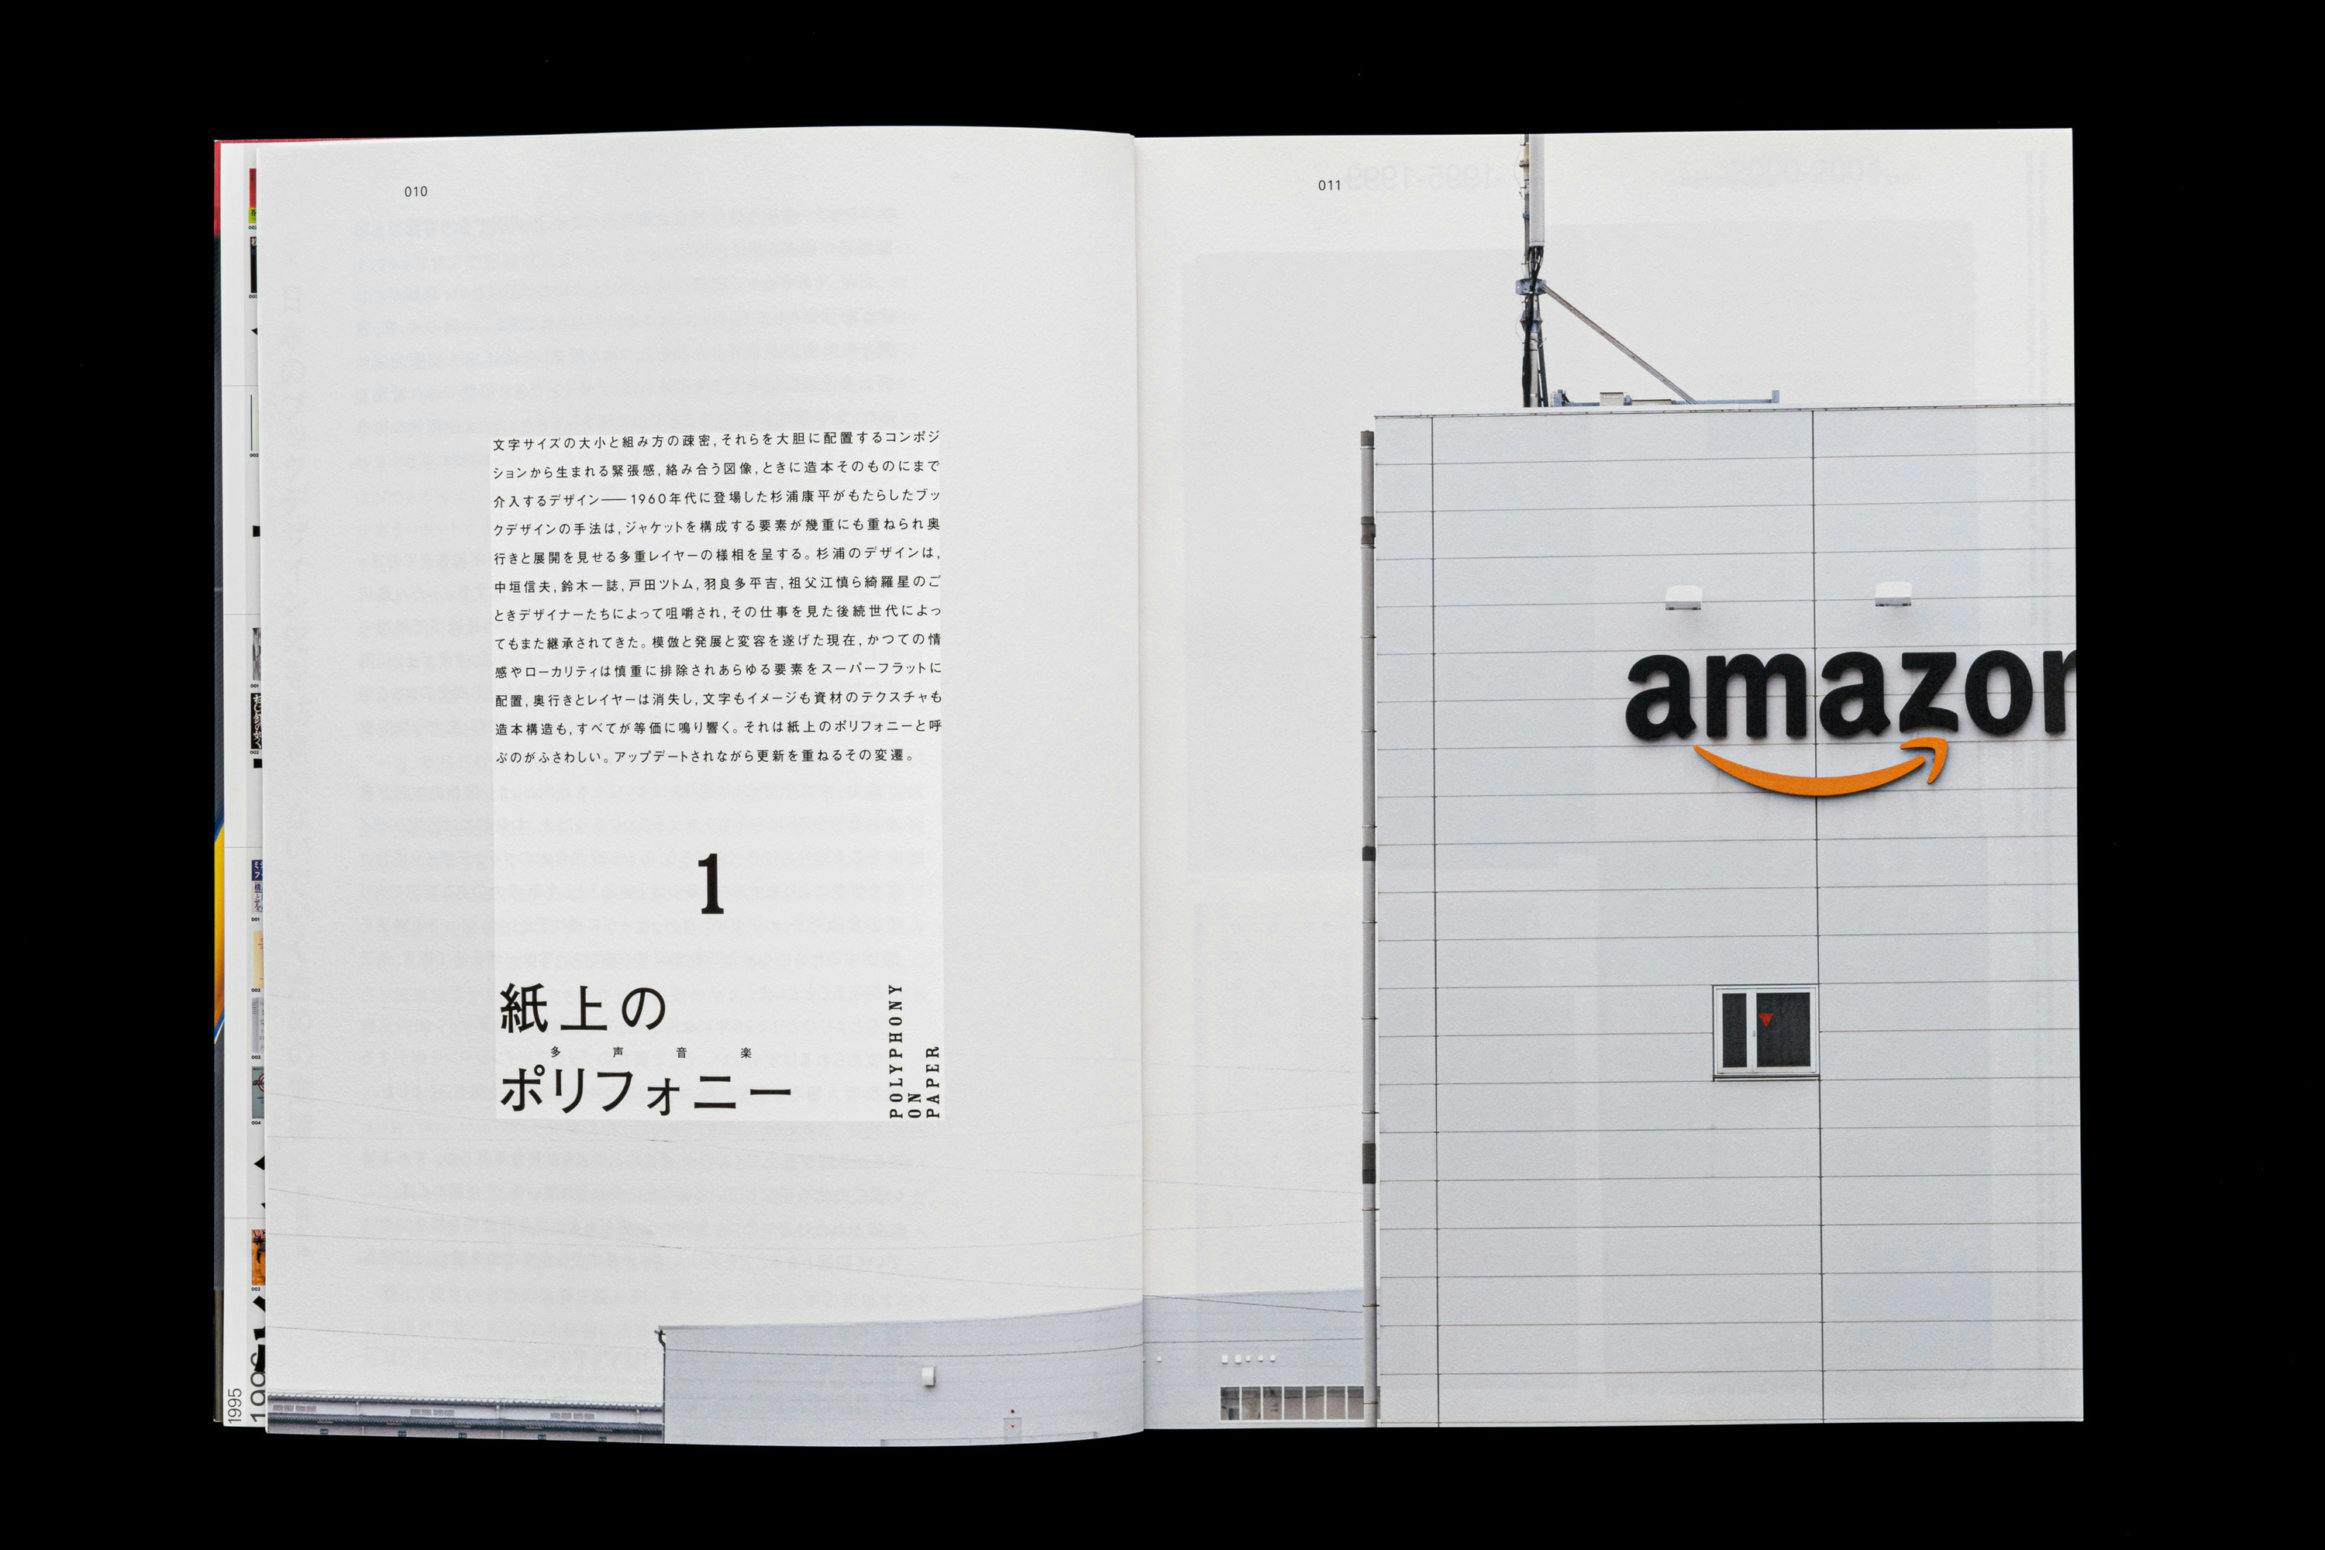 idea 387__現代日本のブックデザイン1996-2020